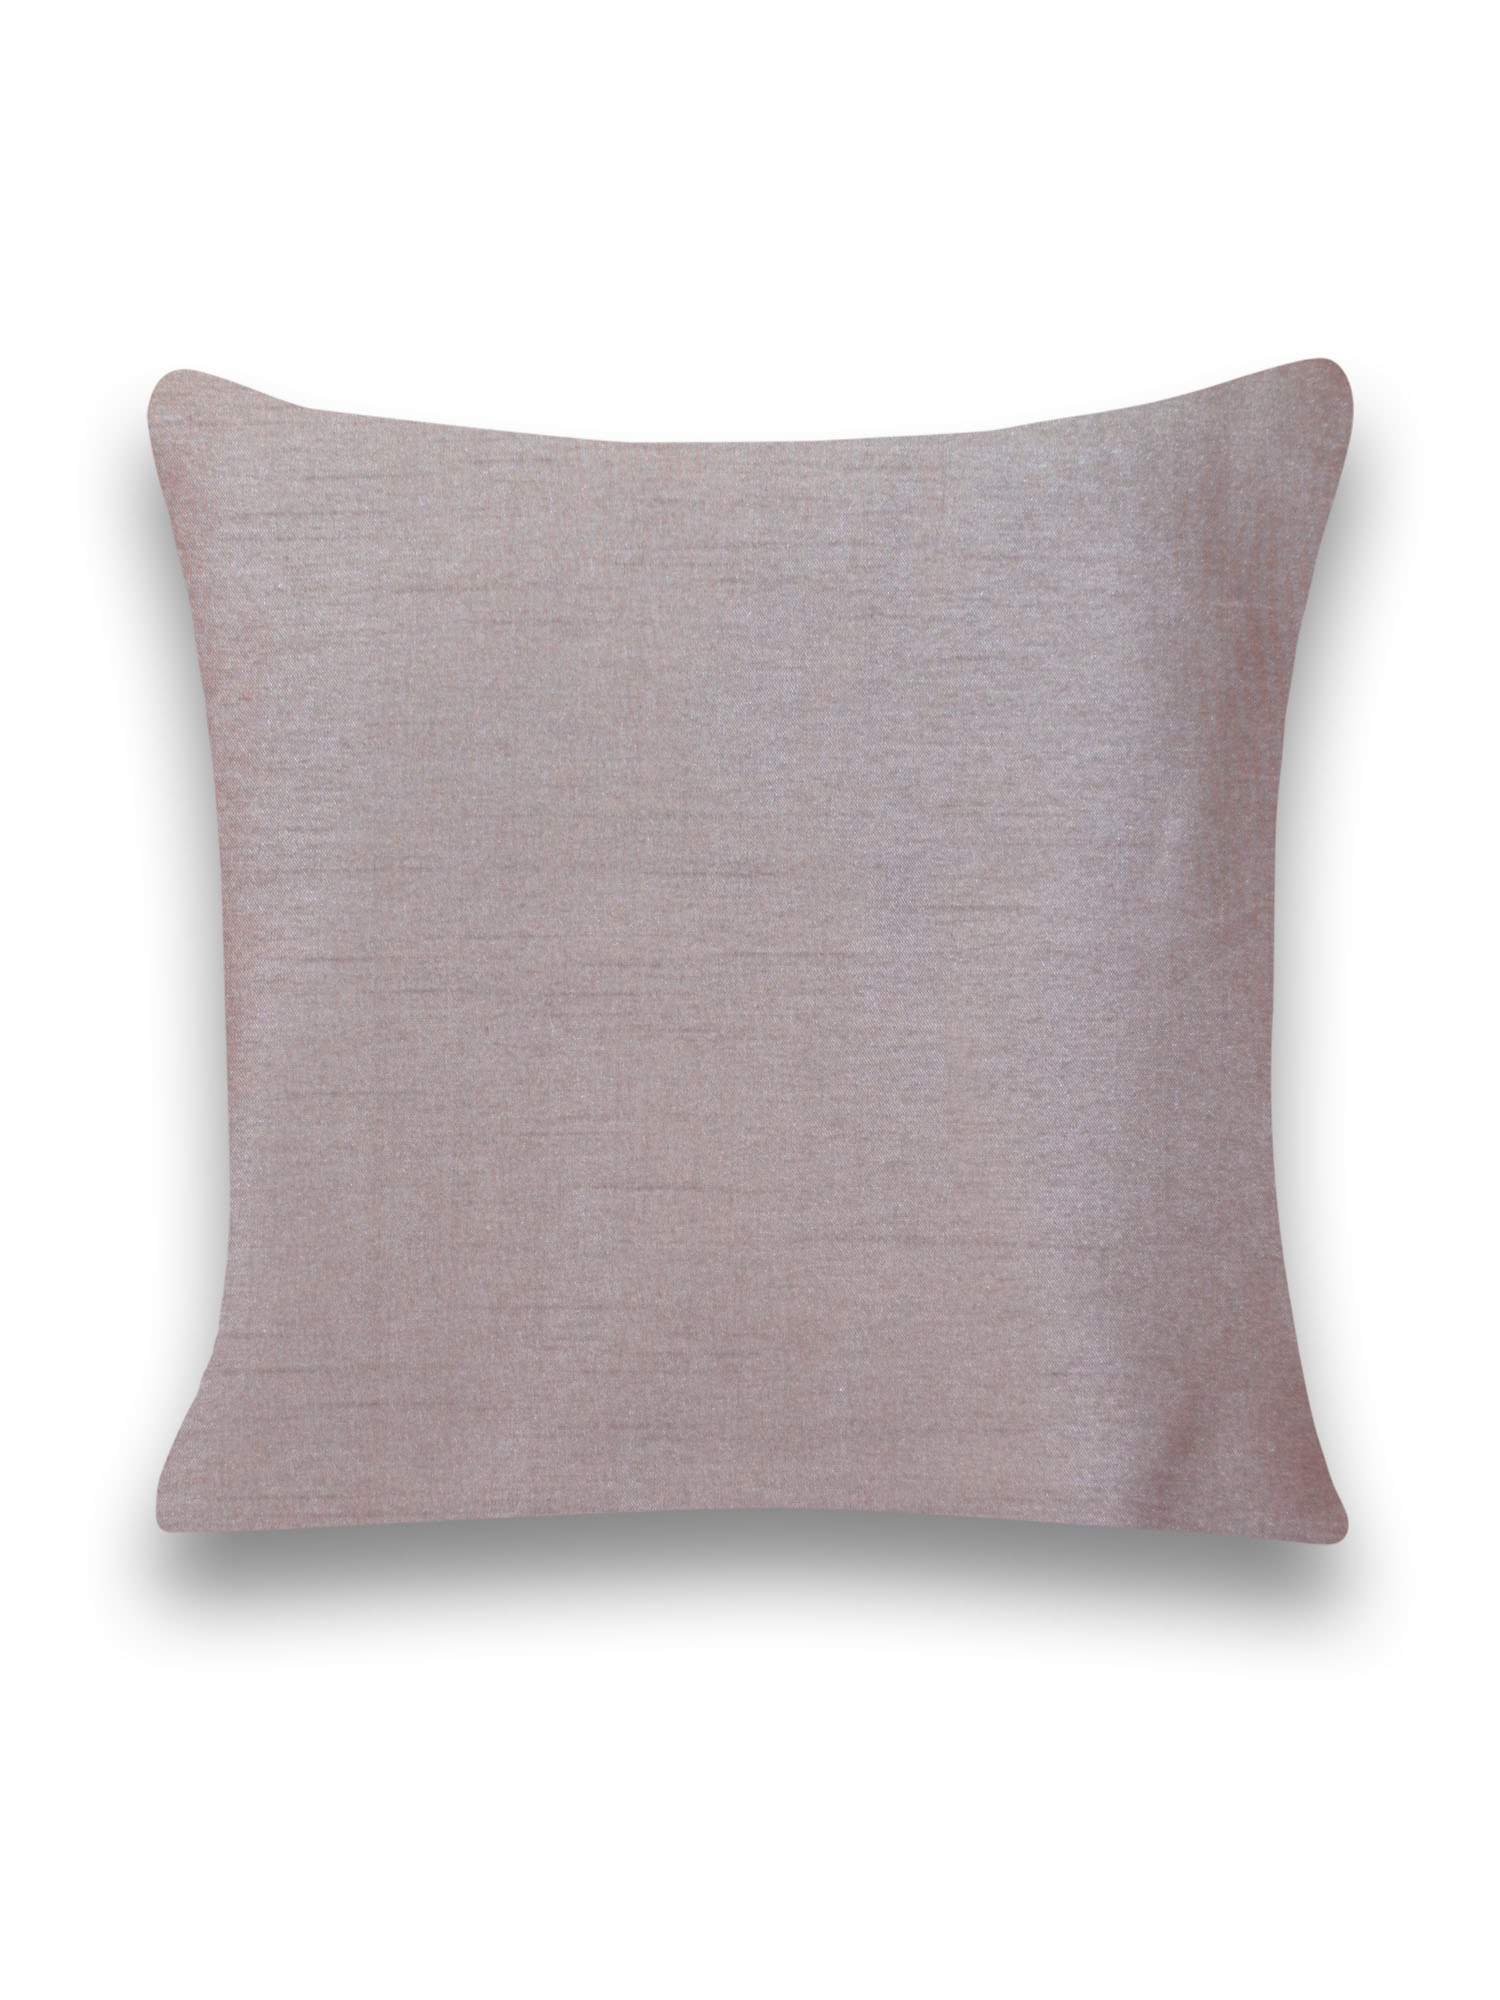 фото Декоративная подушка dda 40*40 розовая, шелковая